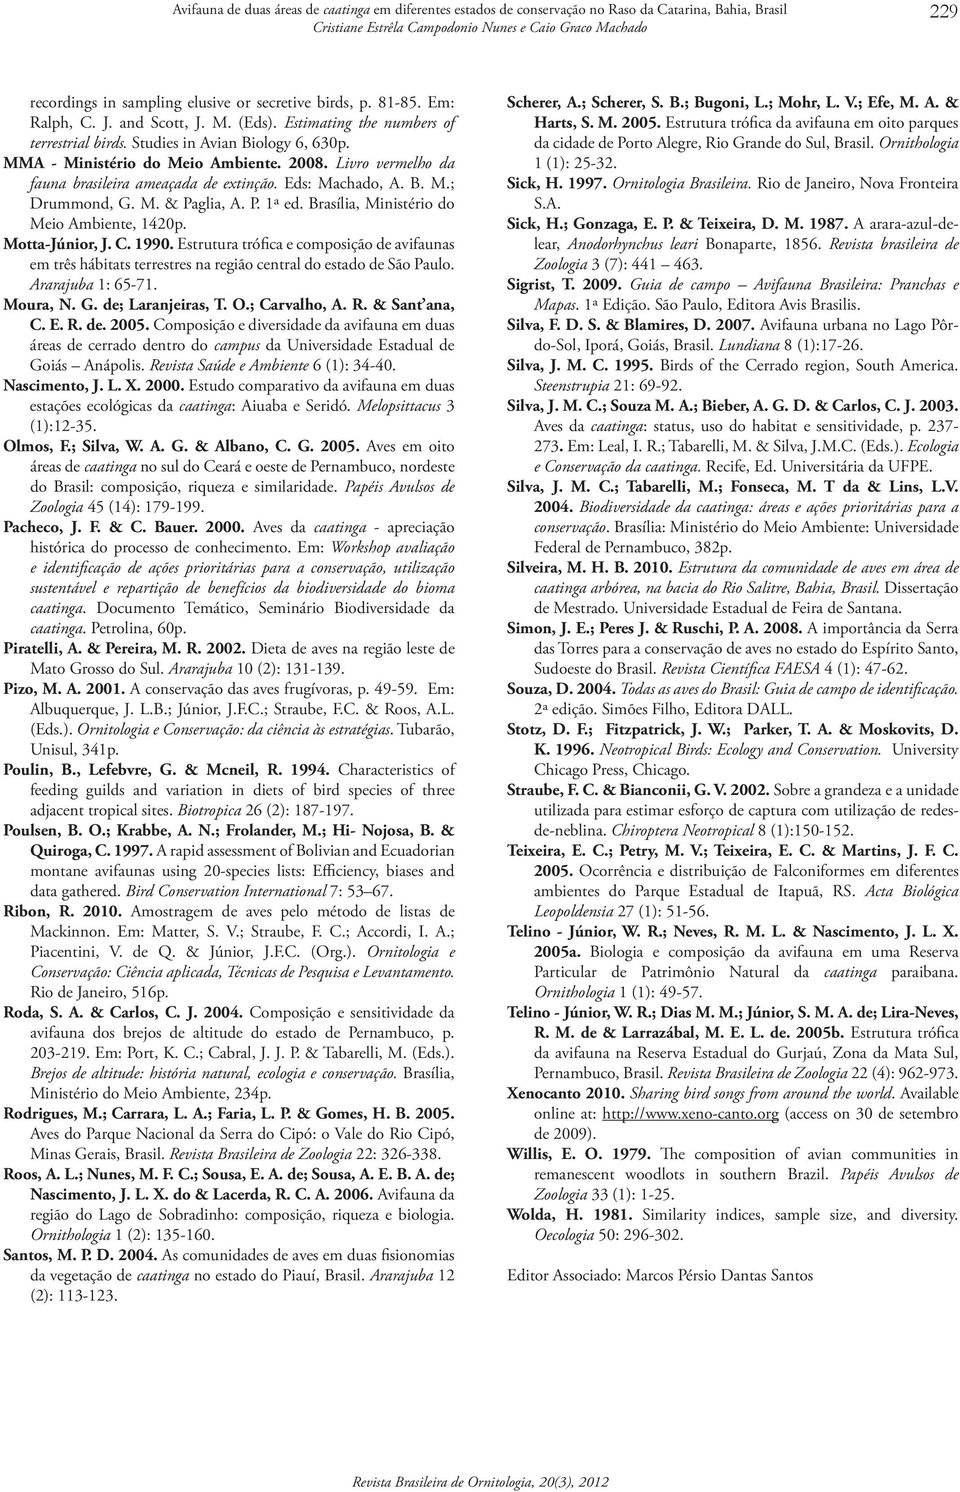 Eds: Machado, A. B. M.; Drummond, G. M. & Paglia, A. P. 1ª ed. Brasília, Ministério do Meio Ambiente, 1420p. Motta-Júnior, J. C. 1990.